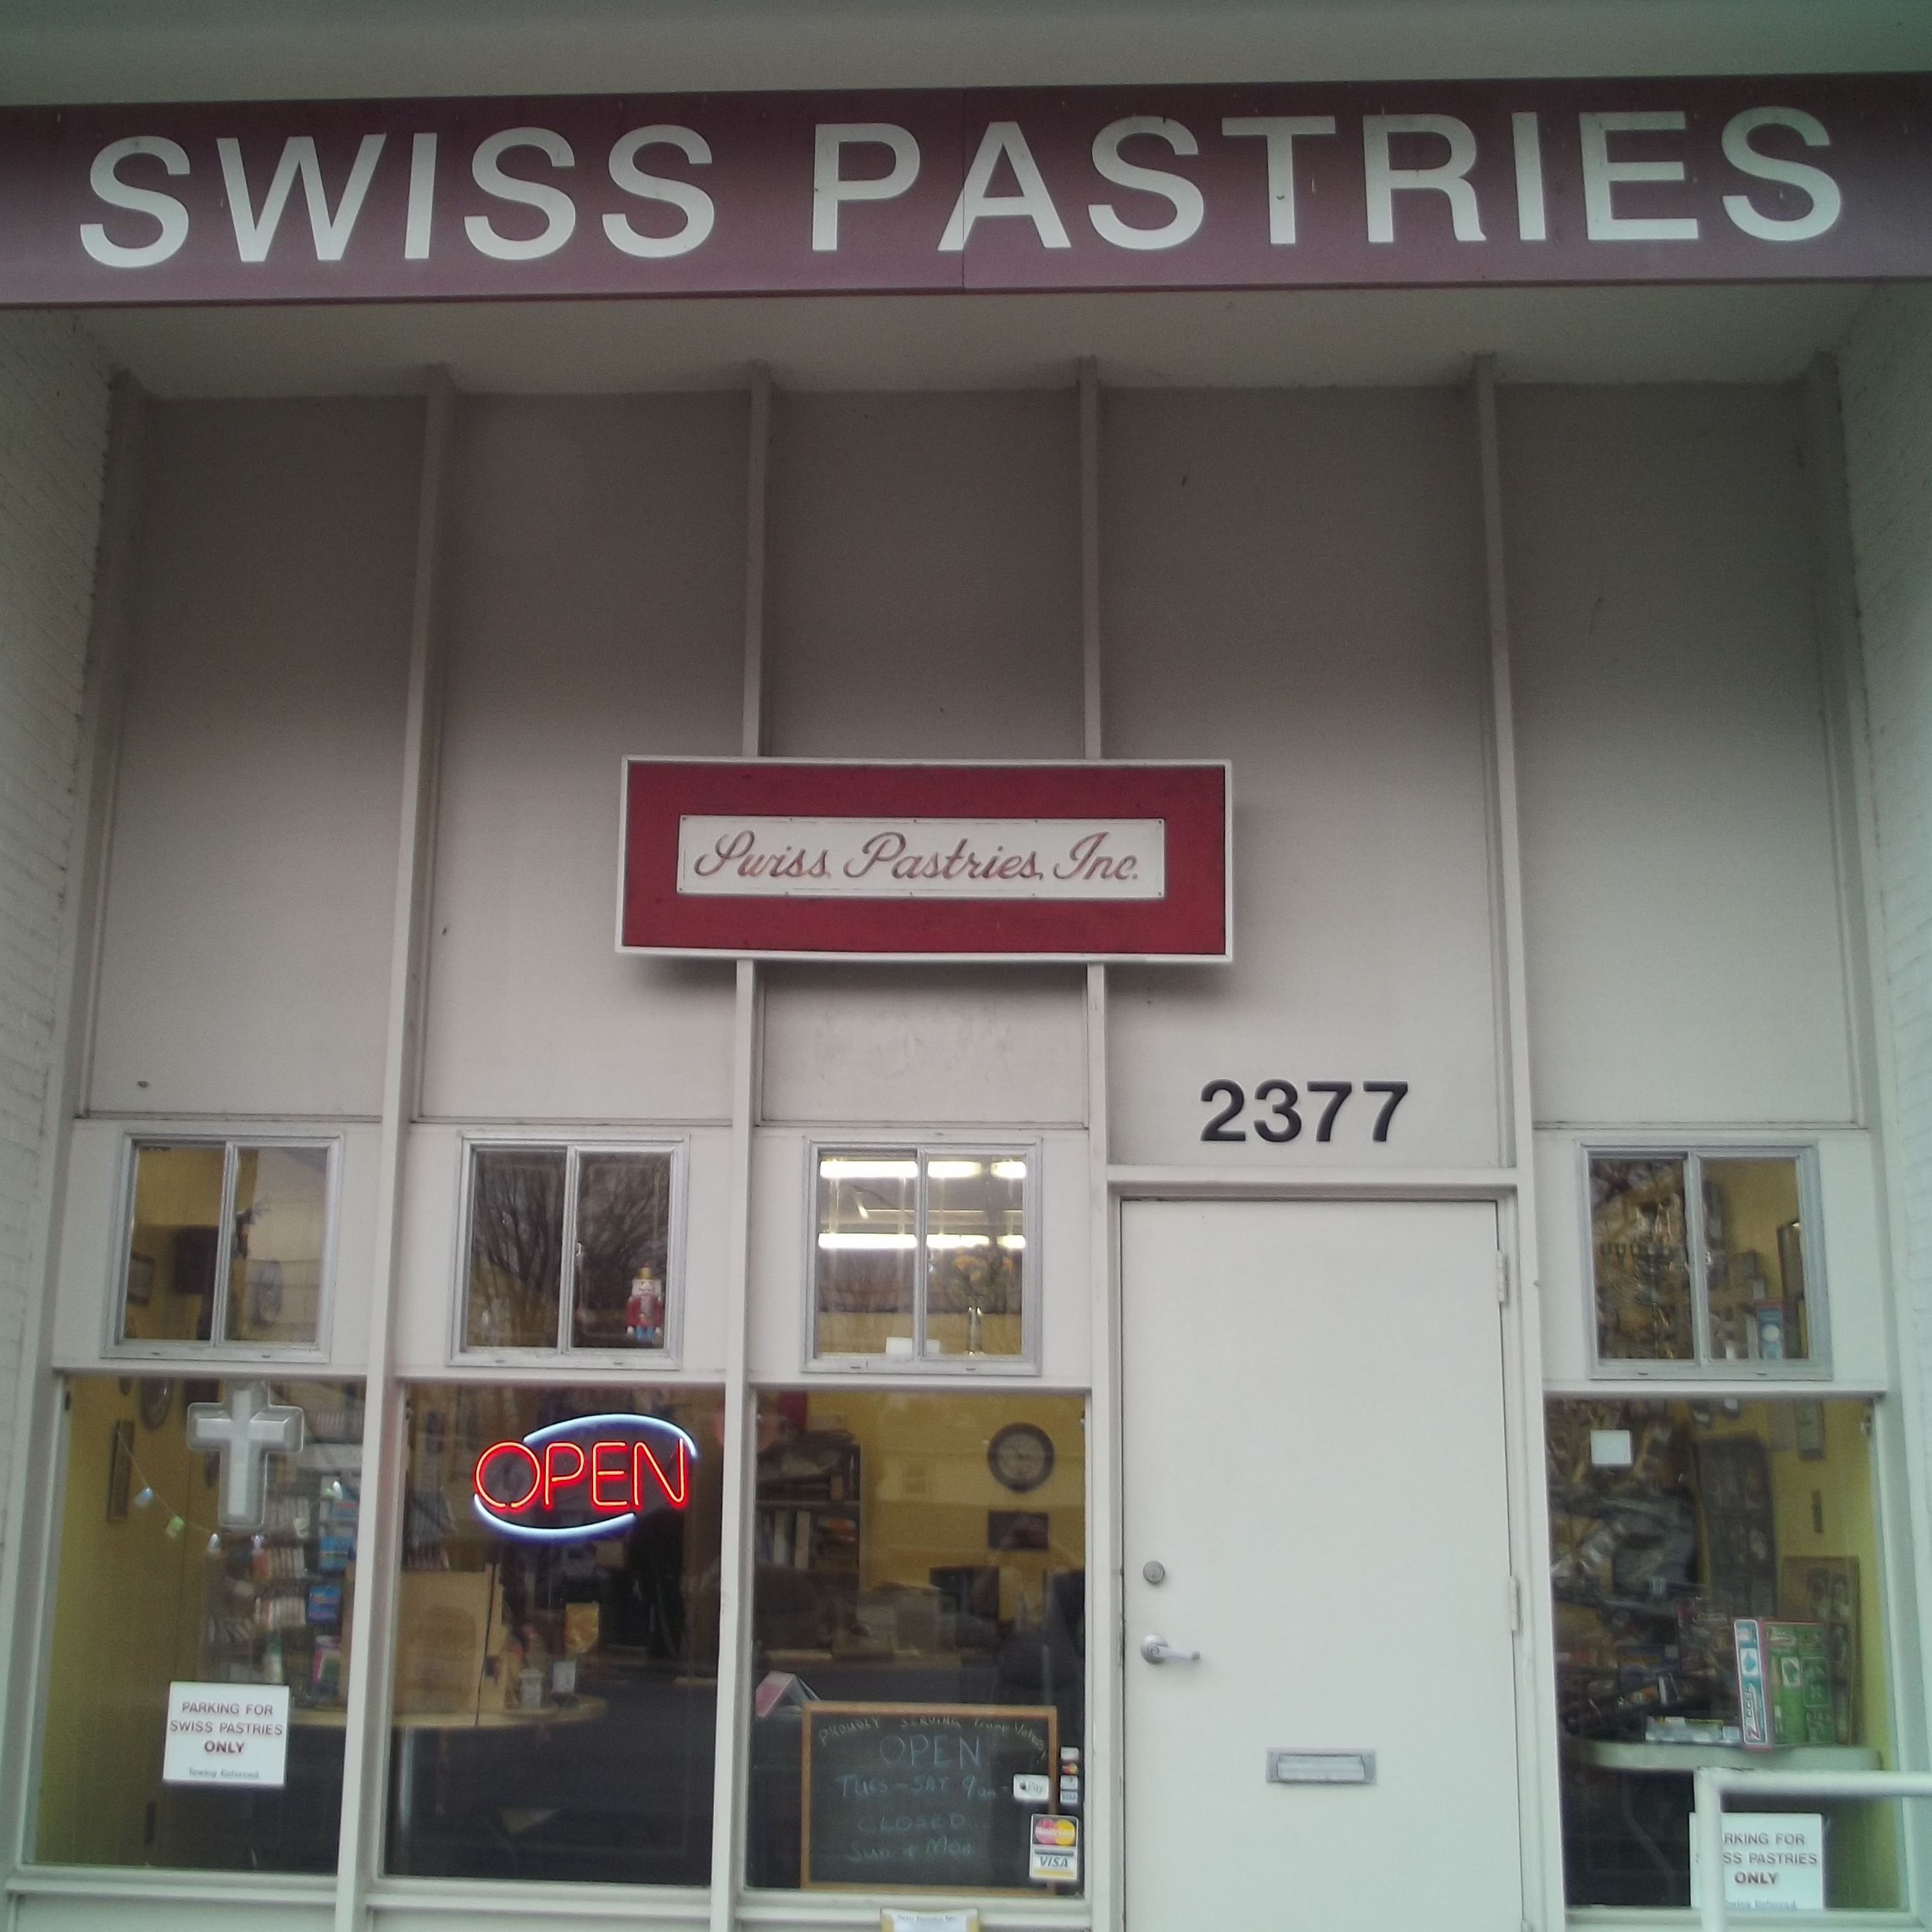 Swiss Pastries, Inc.